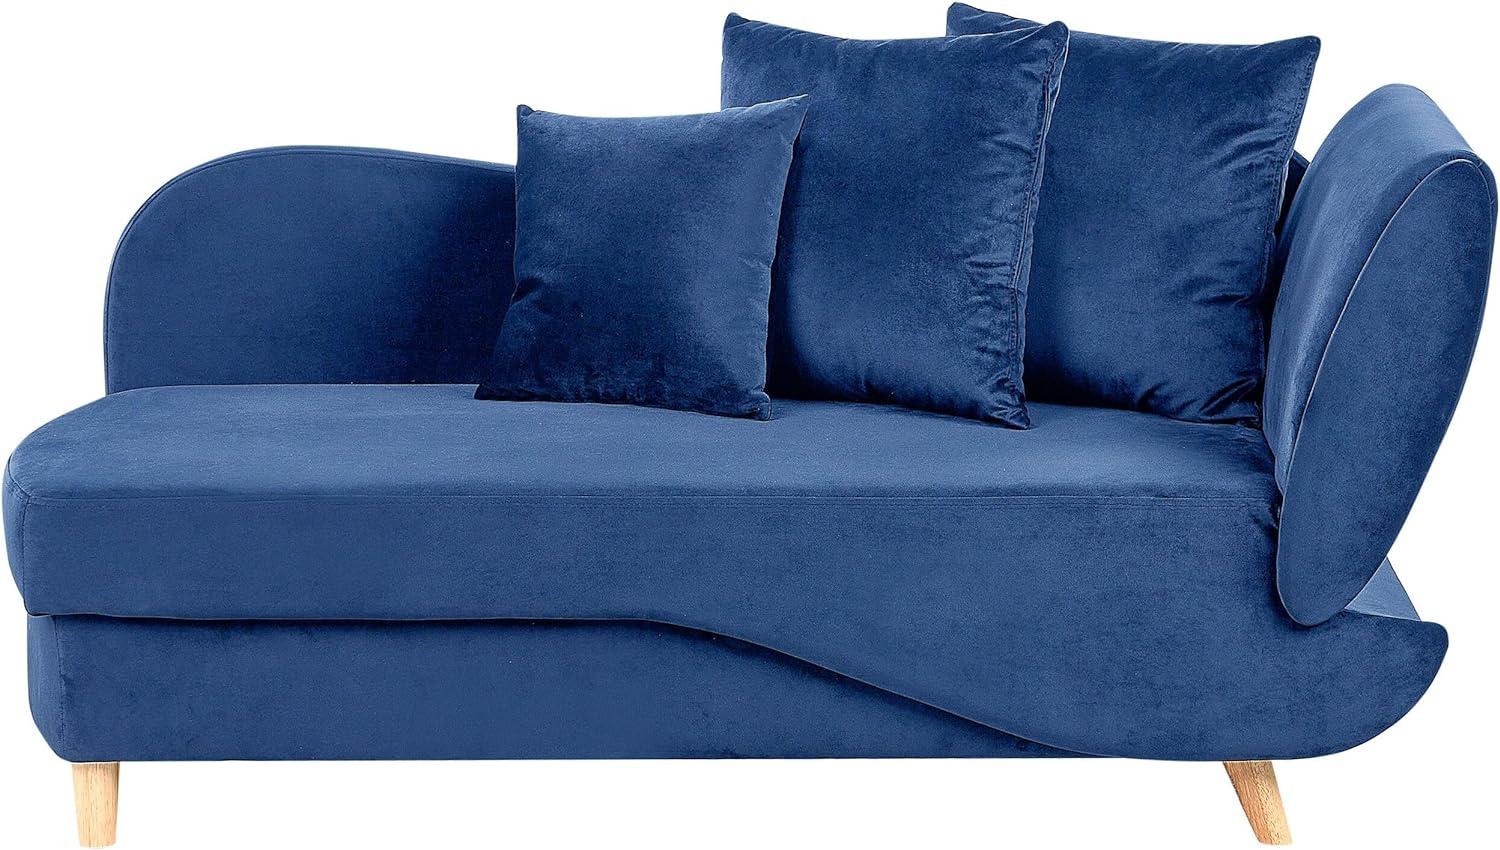 Chaiselongue Samtstoff marineblau mit Bettkasten rechtsseitig MERI II Bild 1